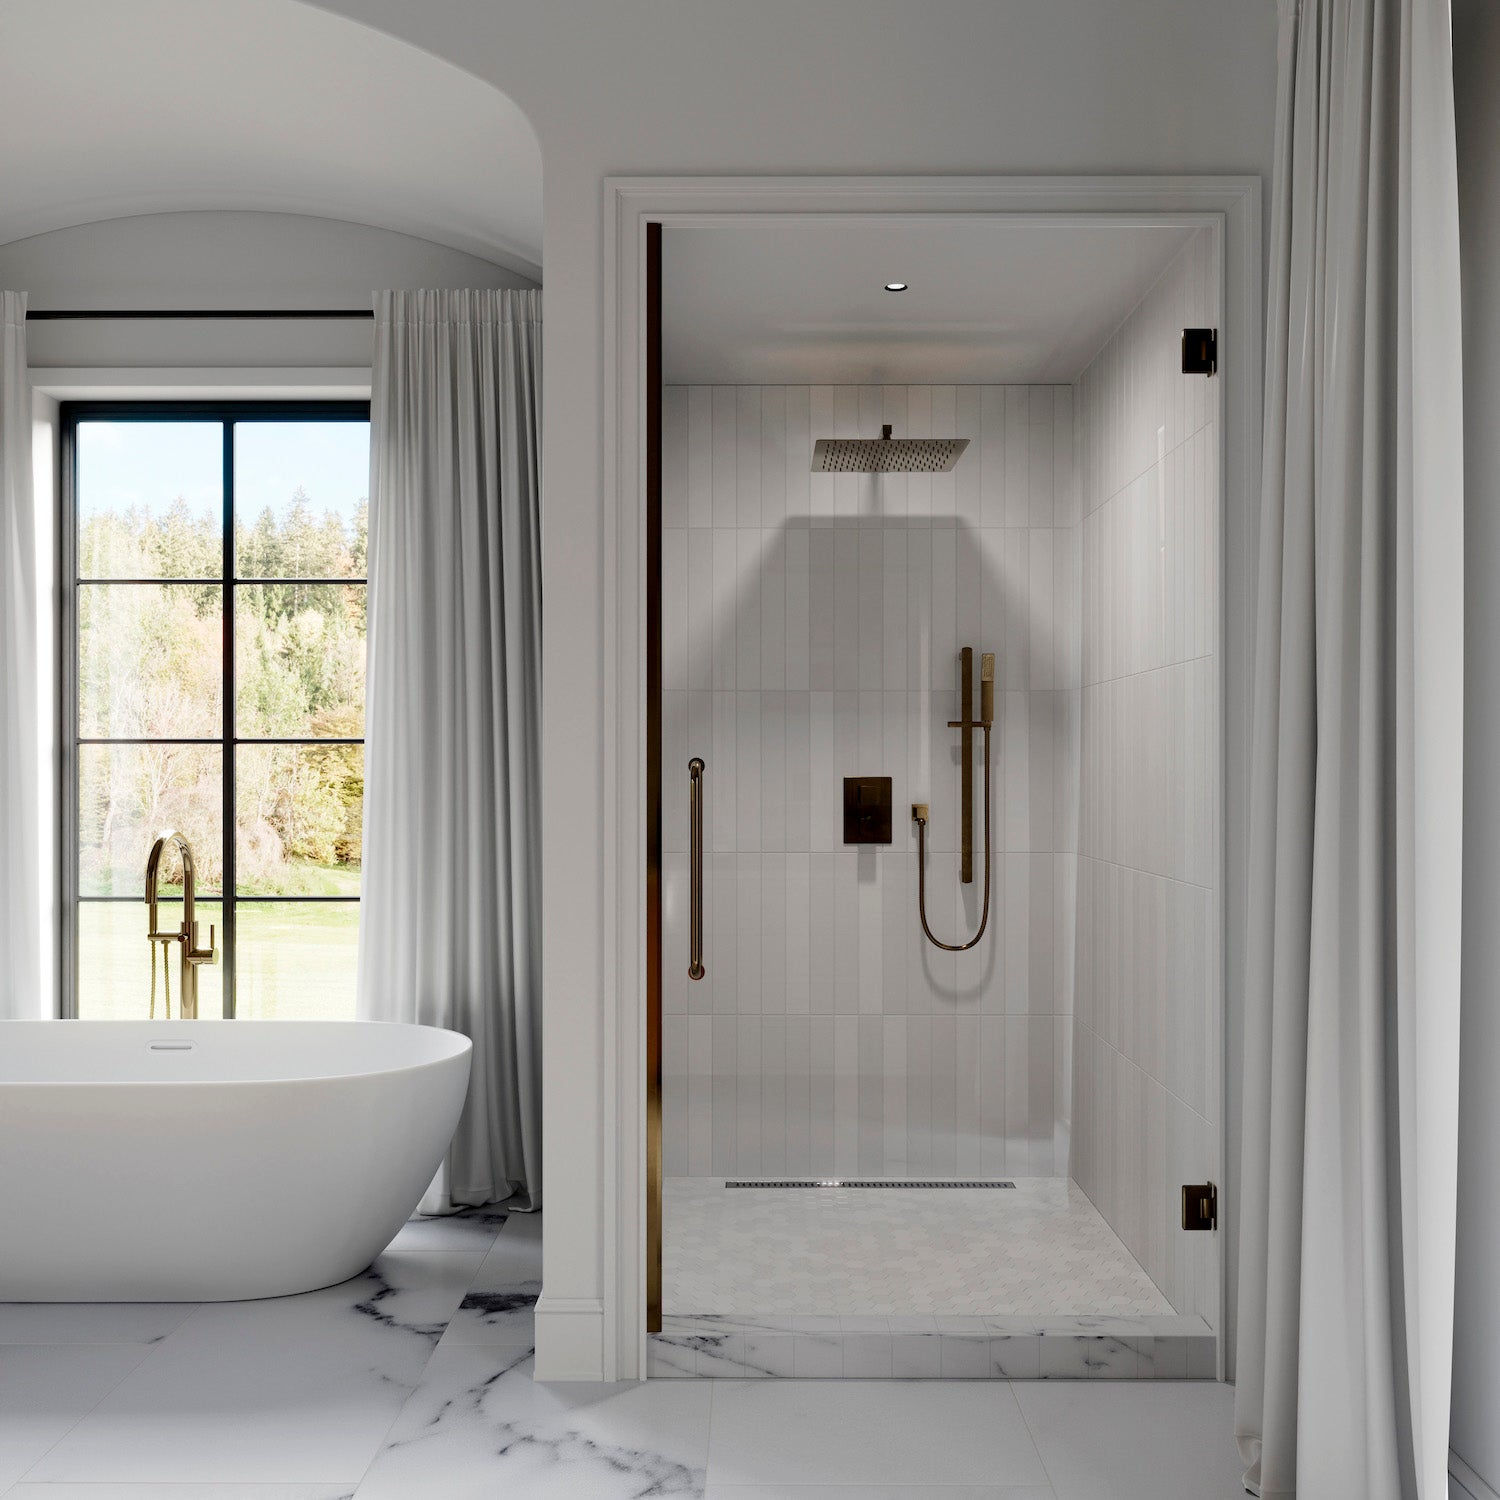 ZLINE Crystal Bay Thermostatic Shower System in a luxury bathroom